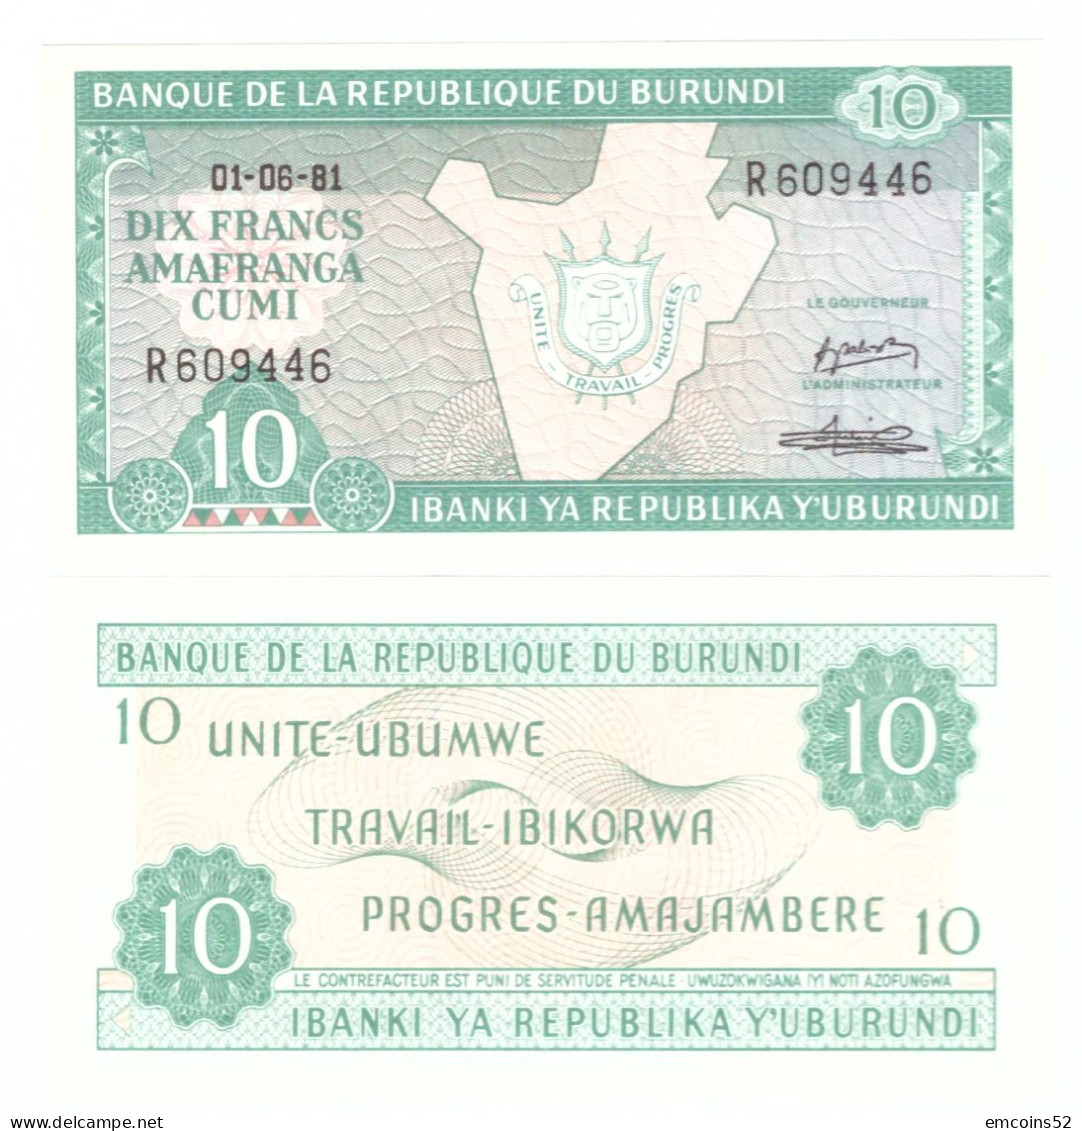 BURUNDI 10 FRANCS 1981 P-33a  UNC - Burundi